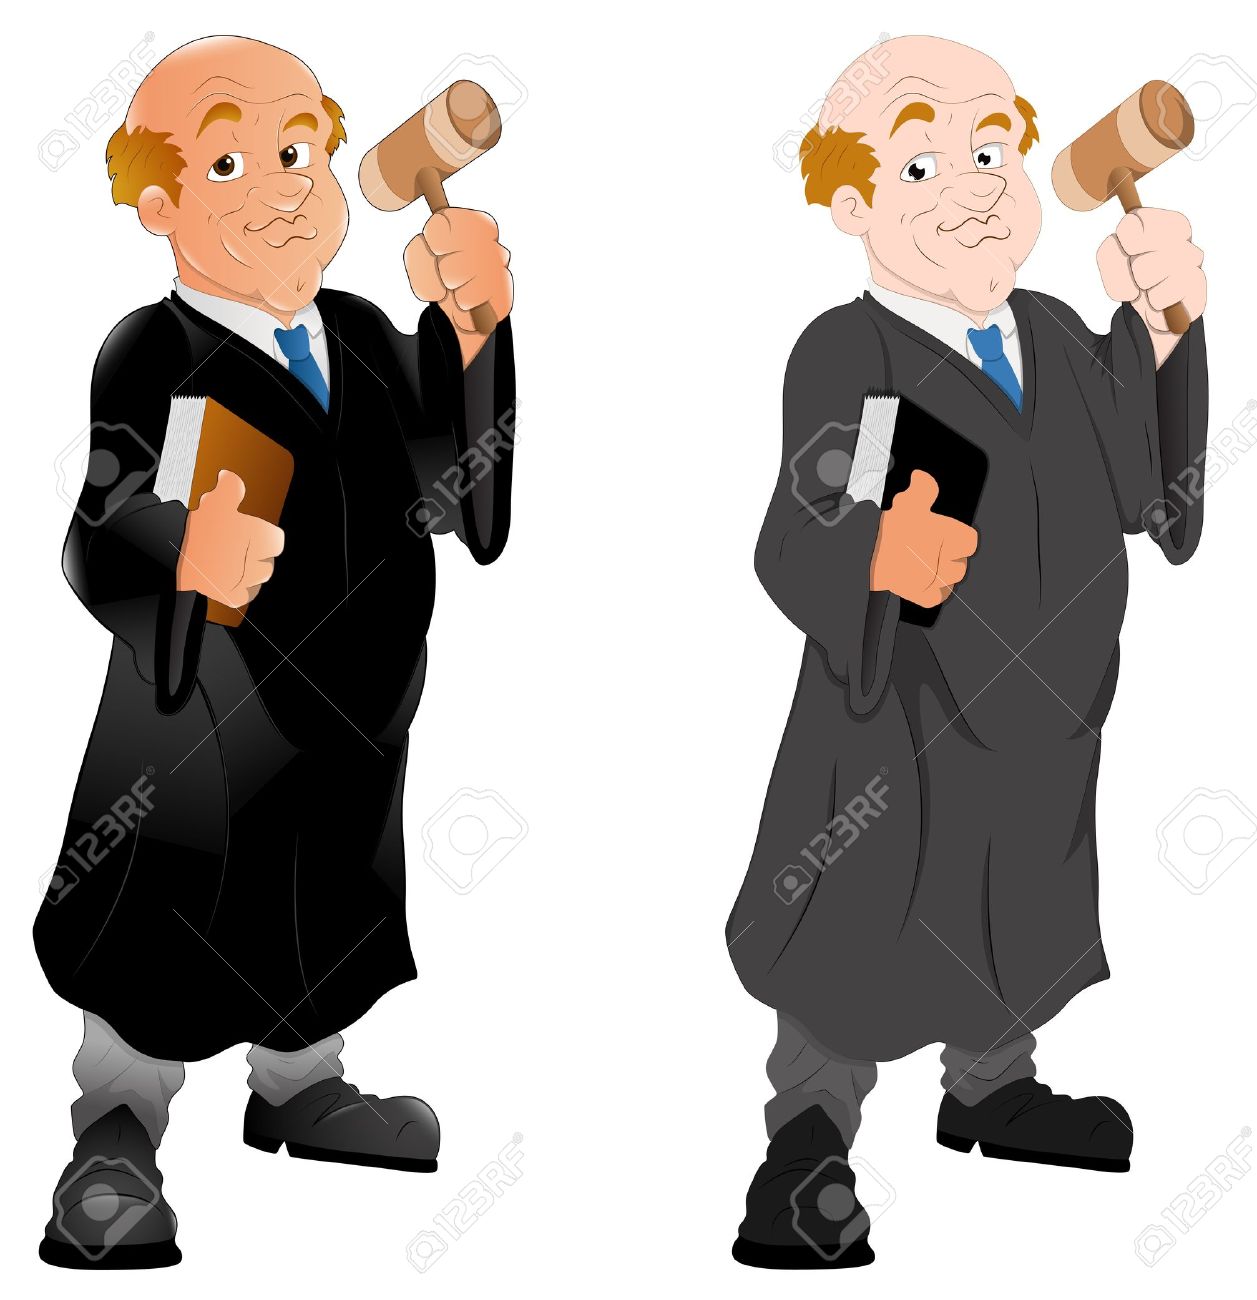 lawyer, judge, cartoon) | Clipart Panda - Free Clipart Images